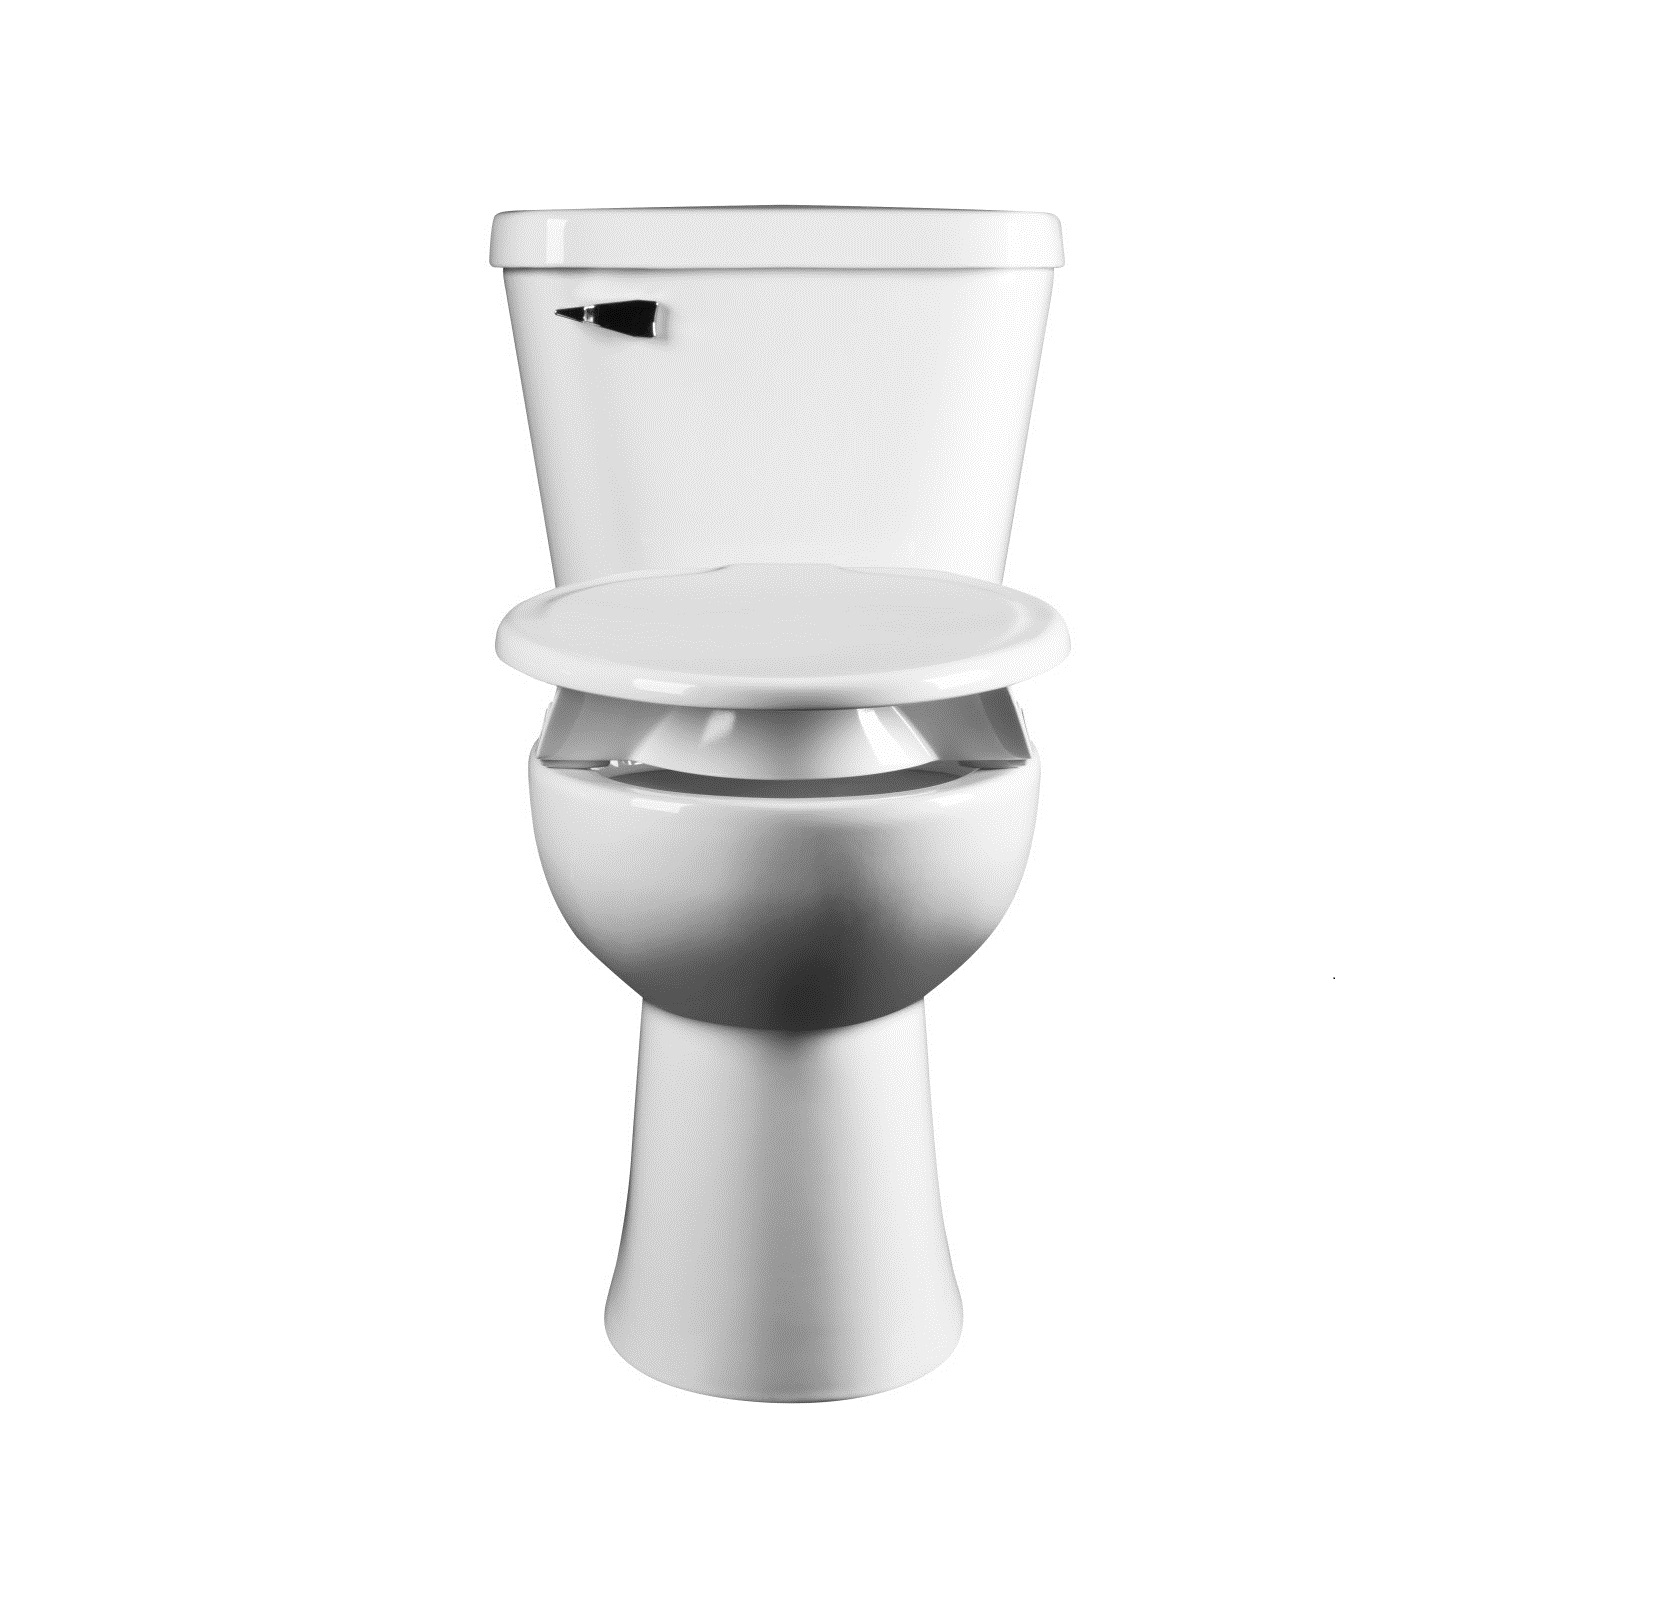 instructions for installing bemis toilet seat